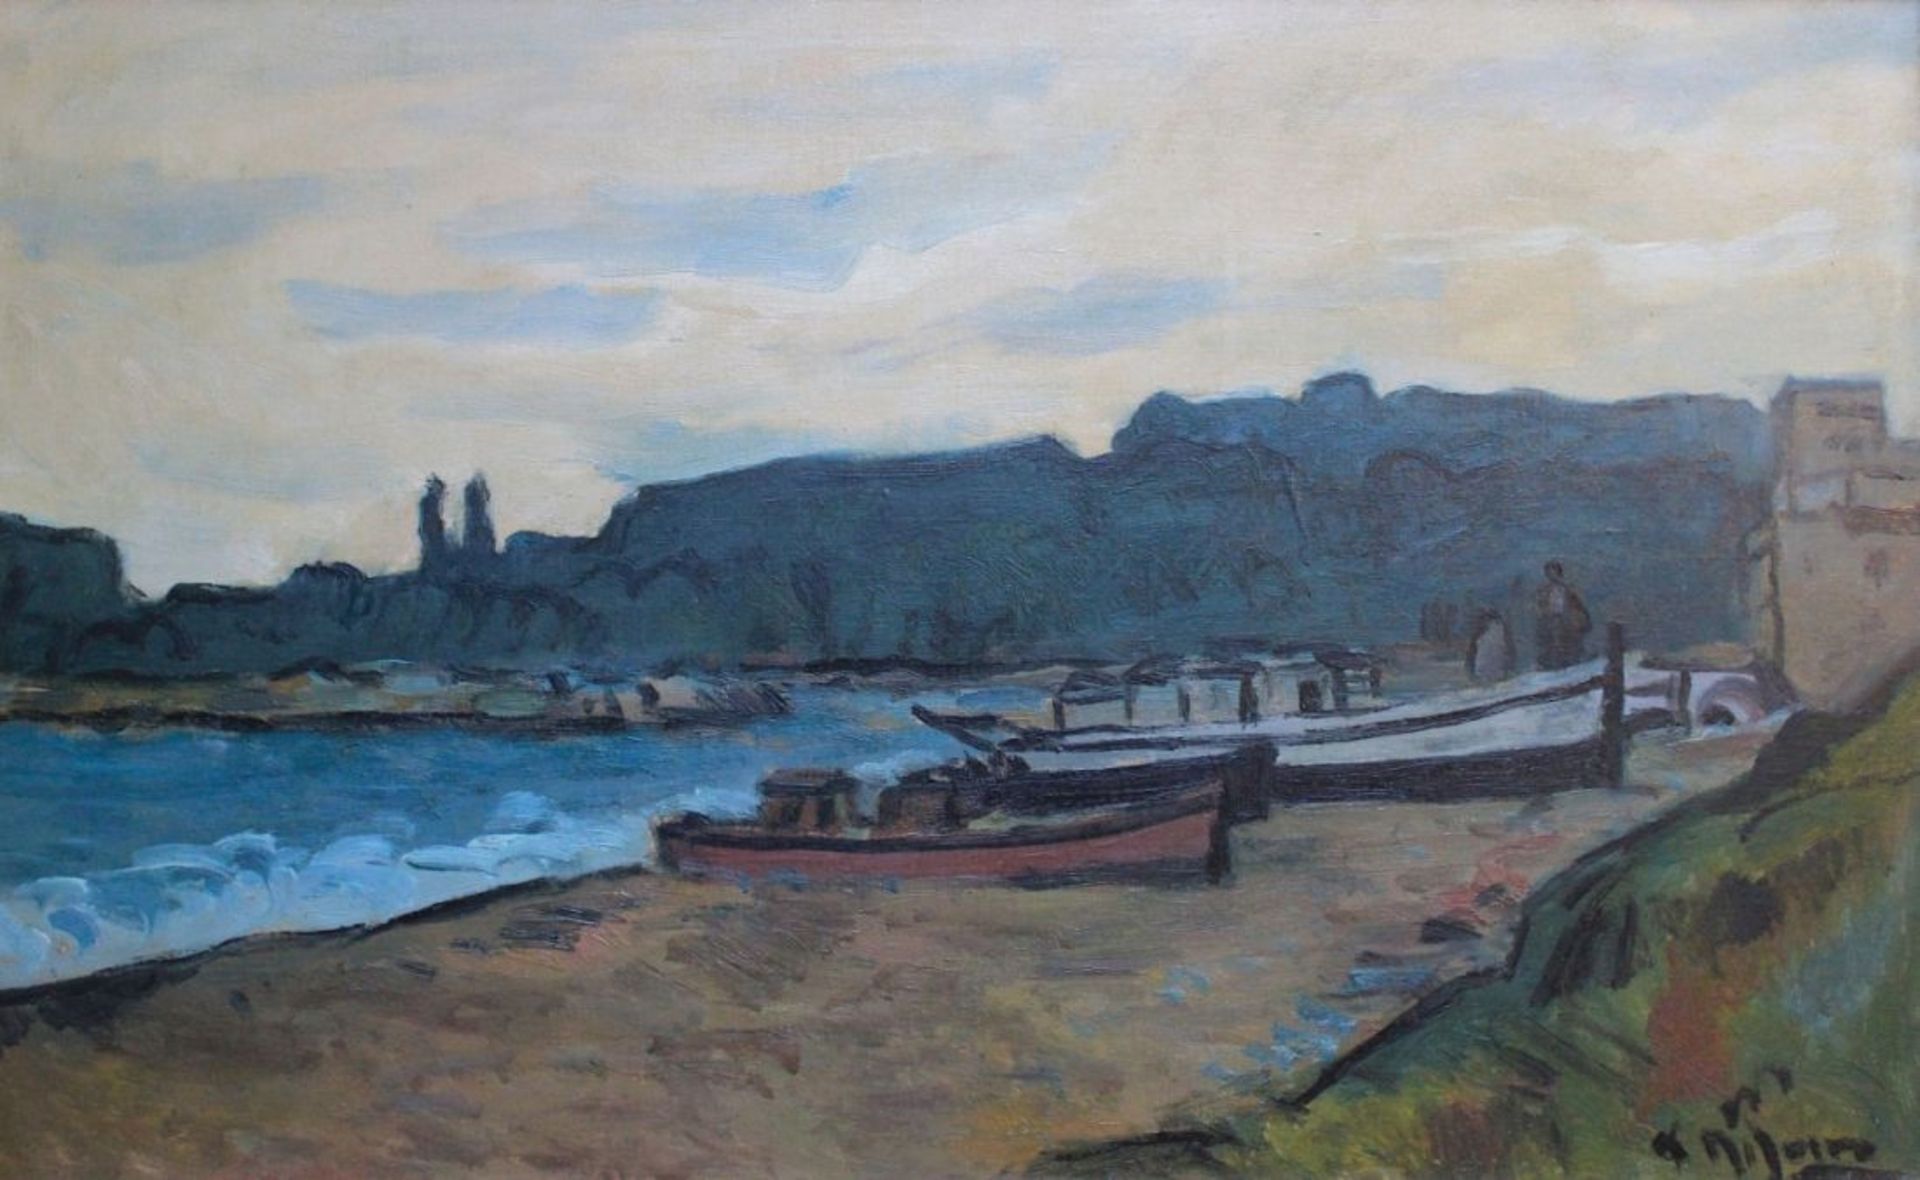 Gemälde - Alceu Ribeiro (1919 Artigas Department - 2013 Palma de Mallorca) "Küstenlandschaft mit